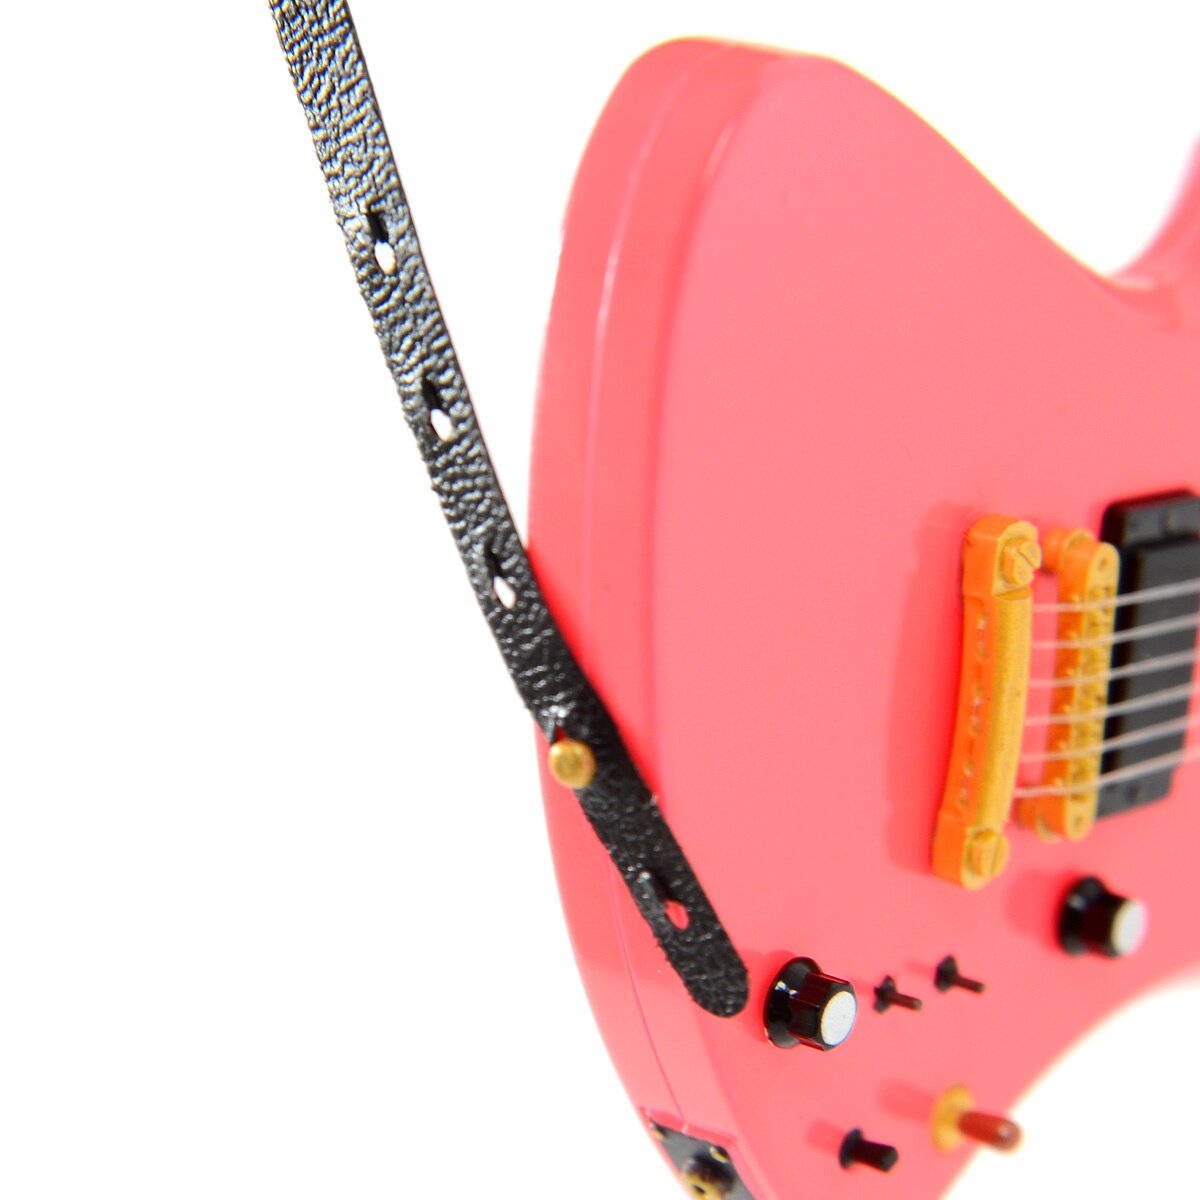 hide Guitar Collection Official Figure Set: SHOCKING PINK Ver.